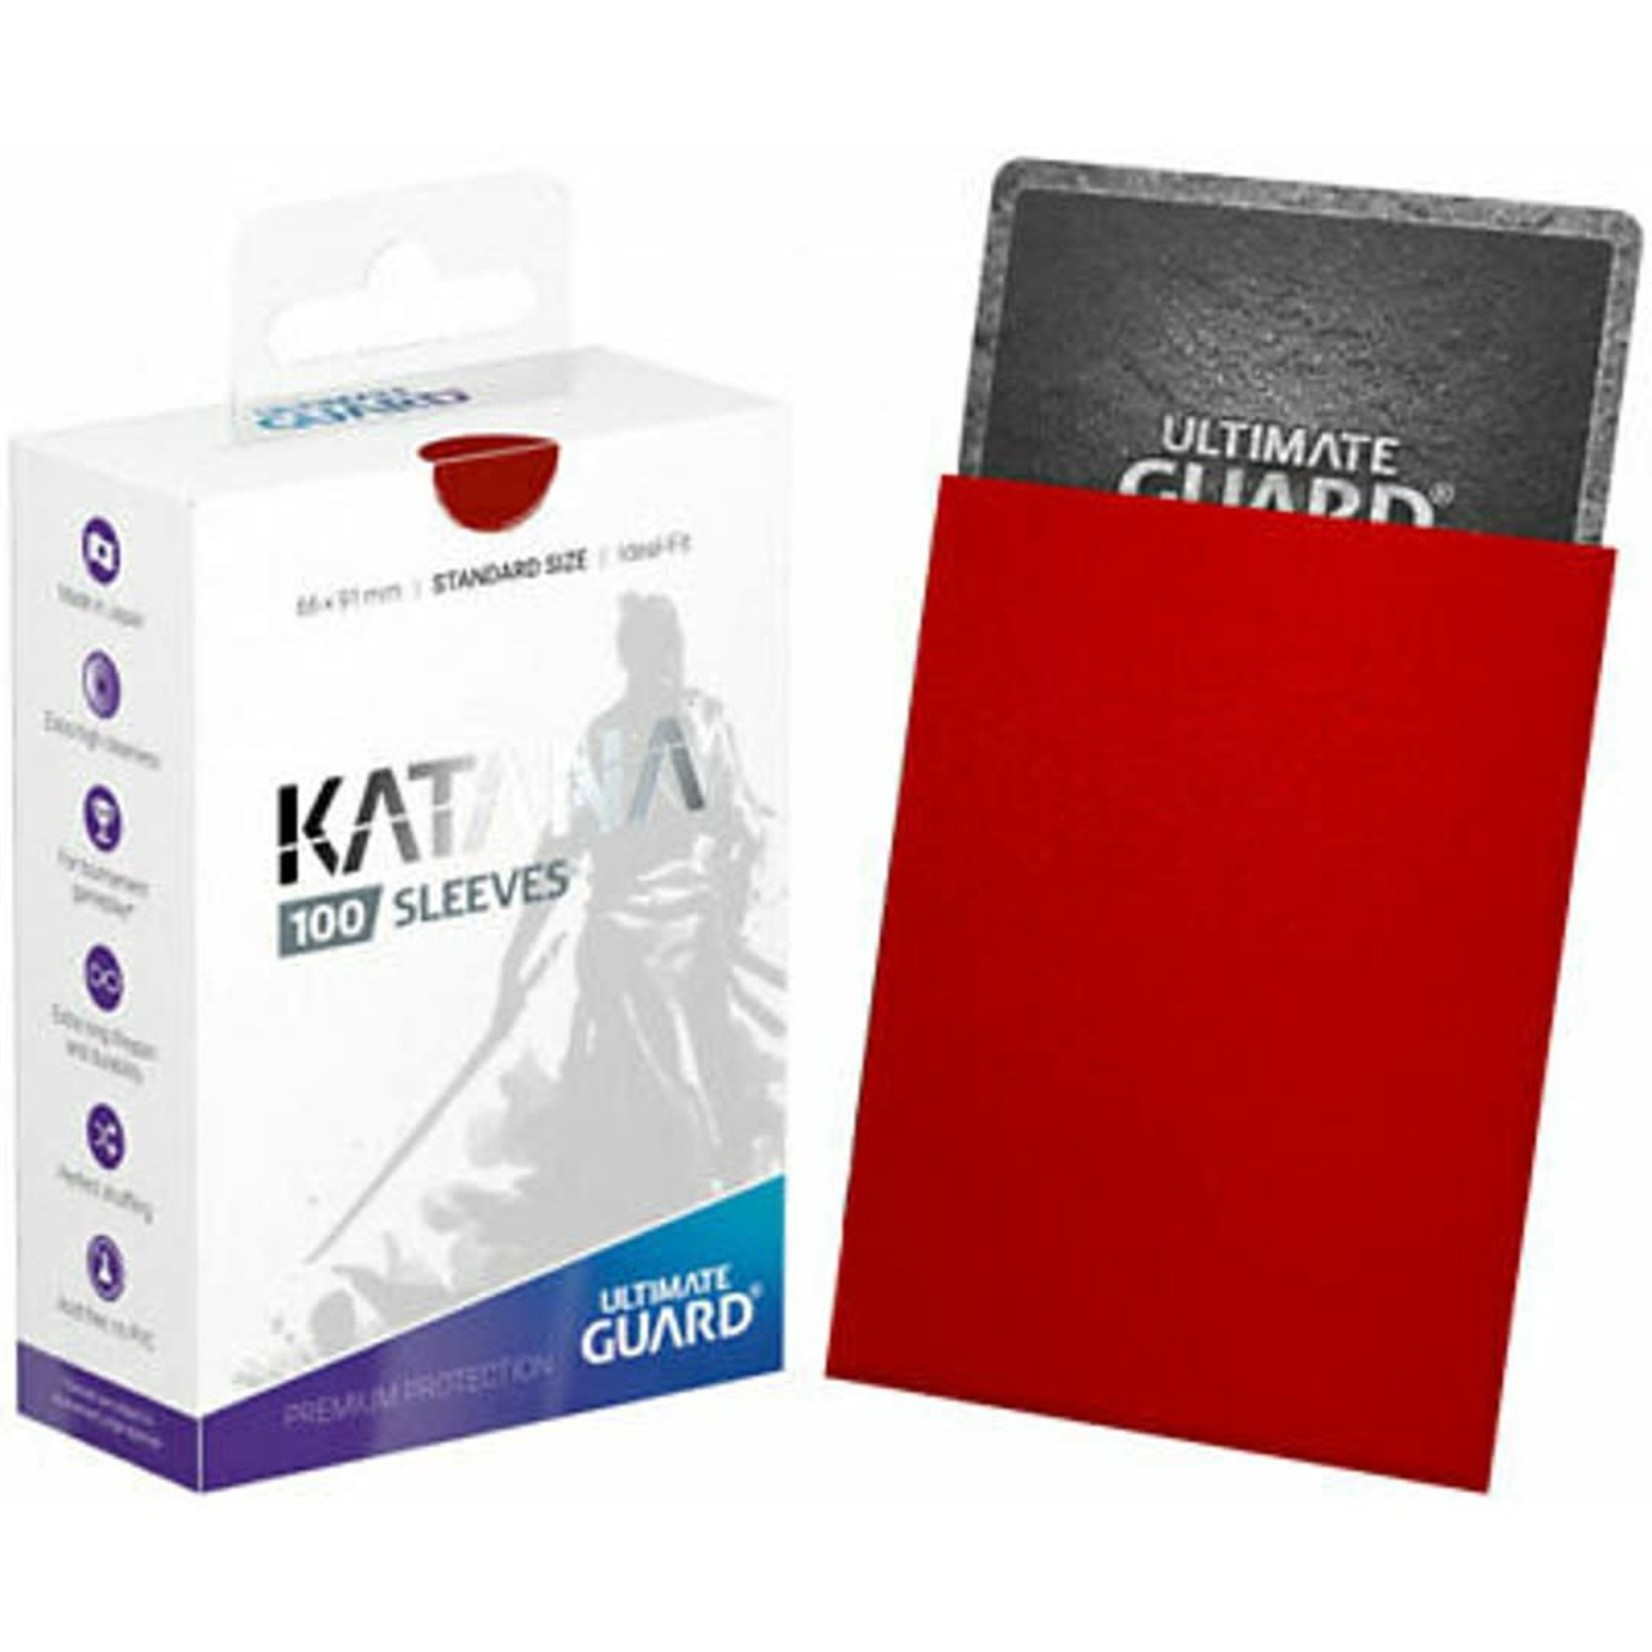 Ultimate Guard Ultimate Guard Katana Sleeves Standard 100 ct Red